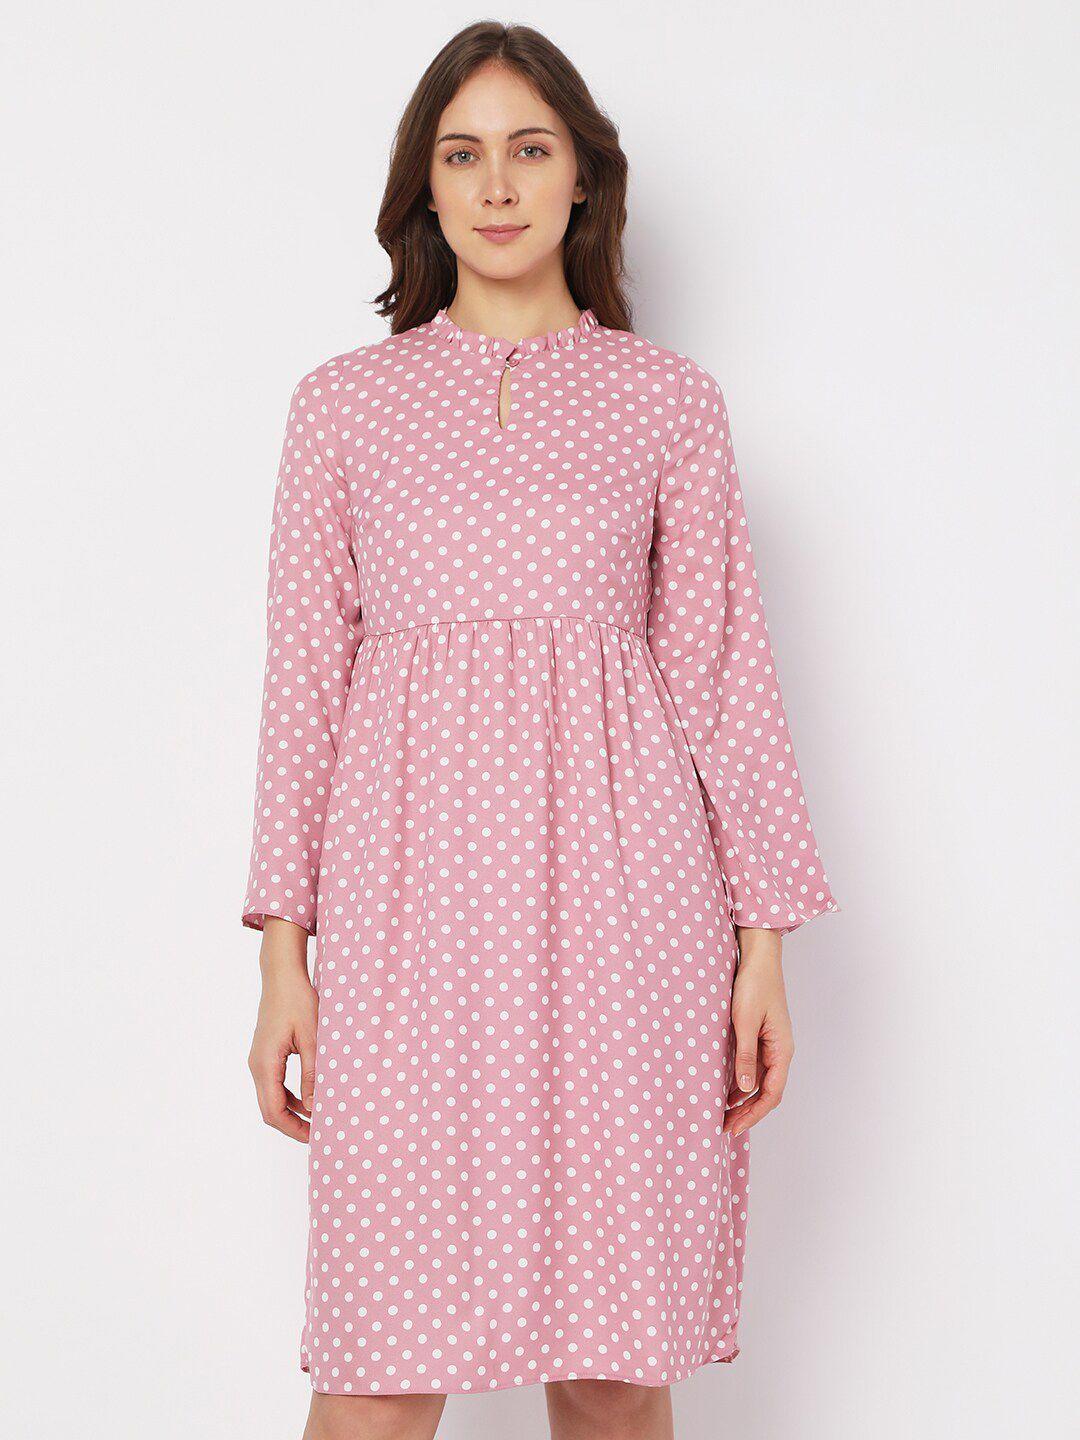 vero moda polka dots printed dress